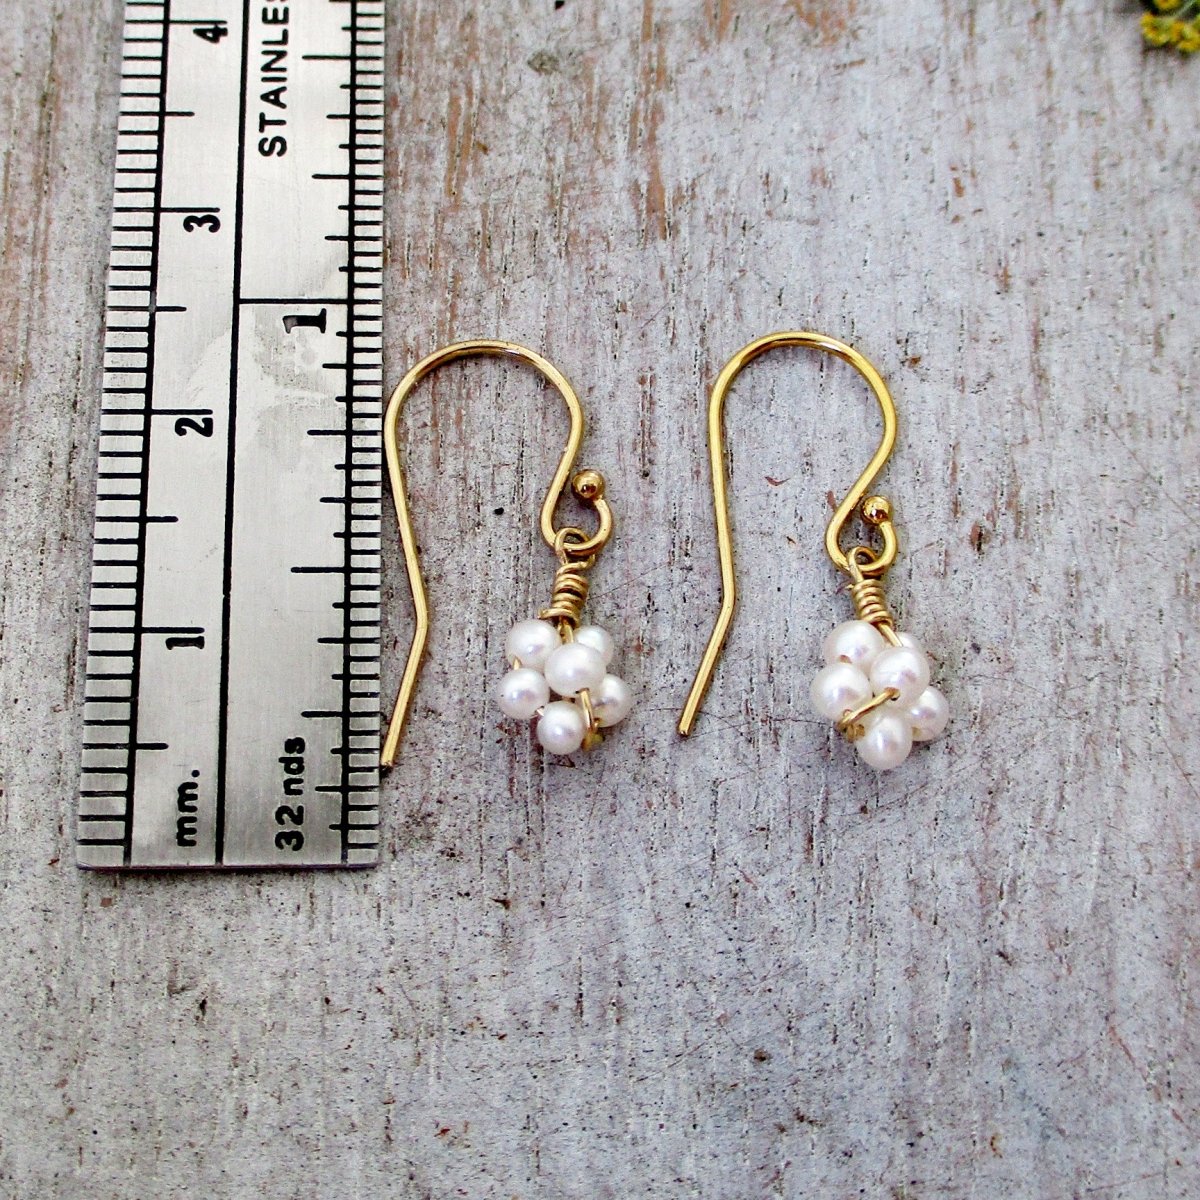 Genuine Freshwater Pearl Flower Earrings - Luxe Design Jewellery